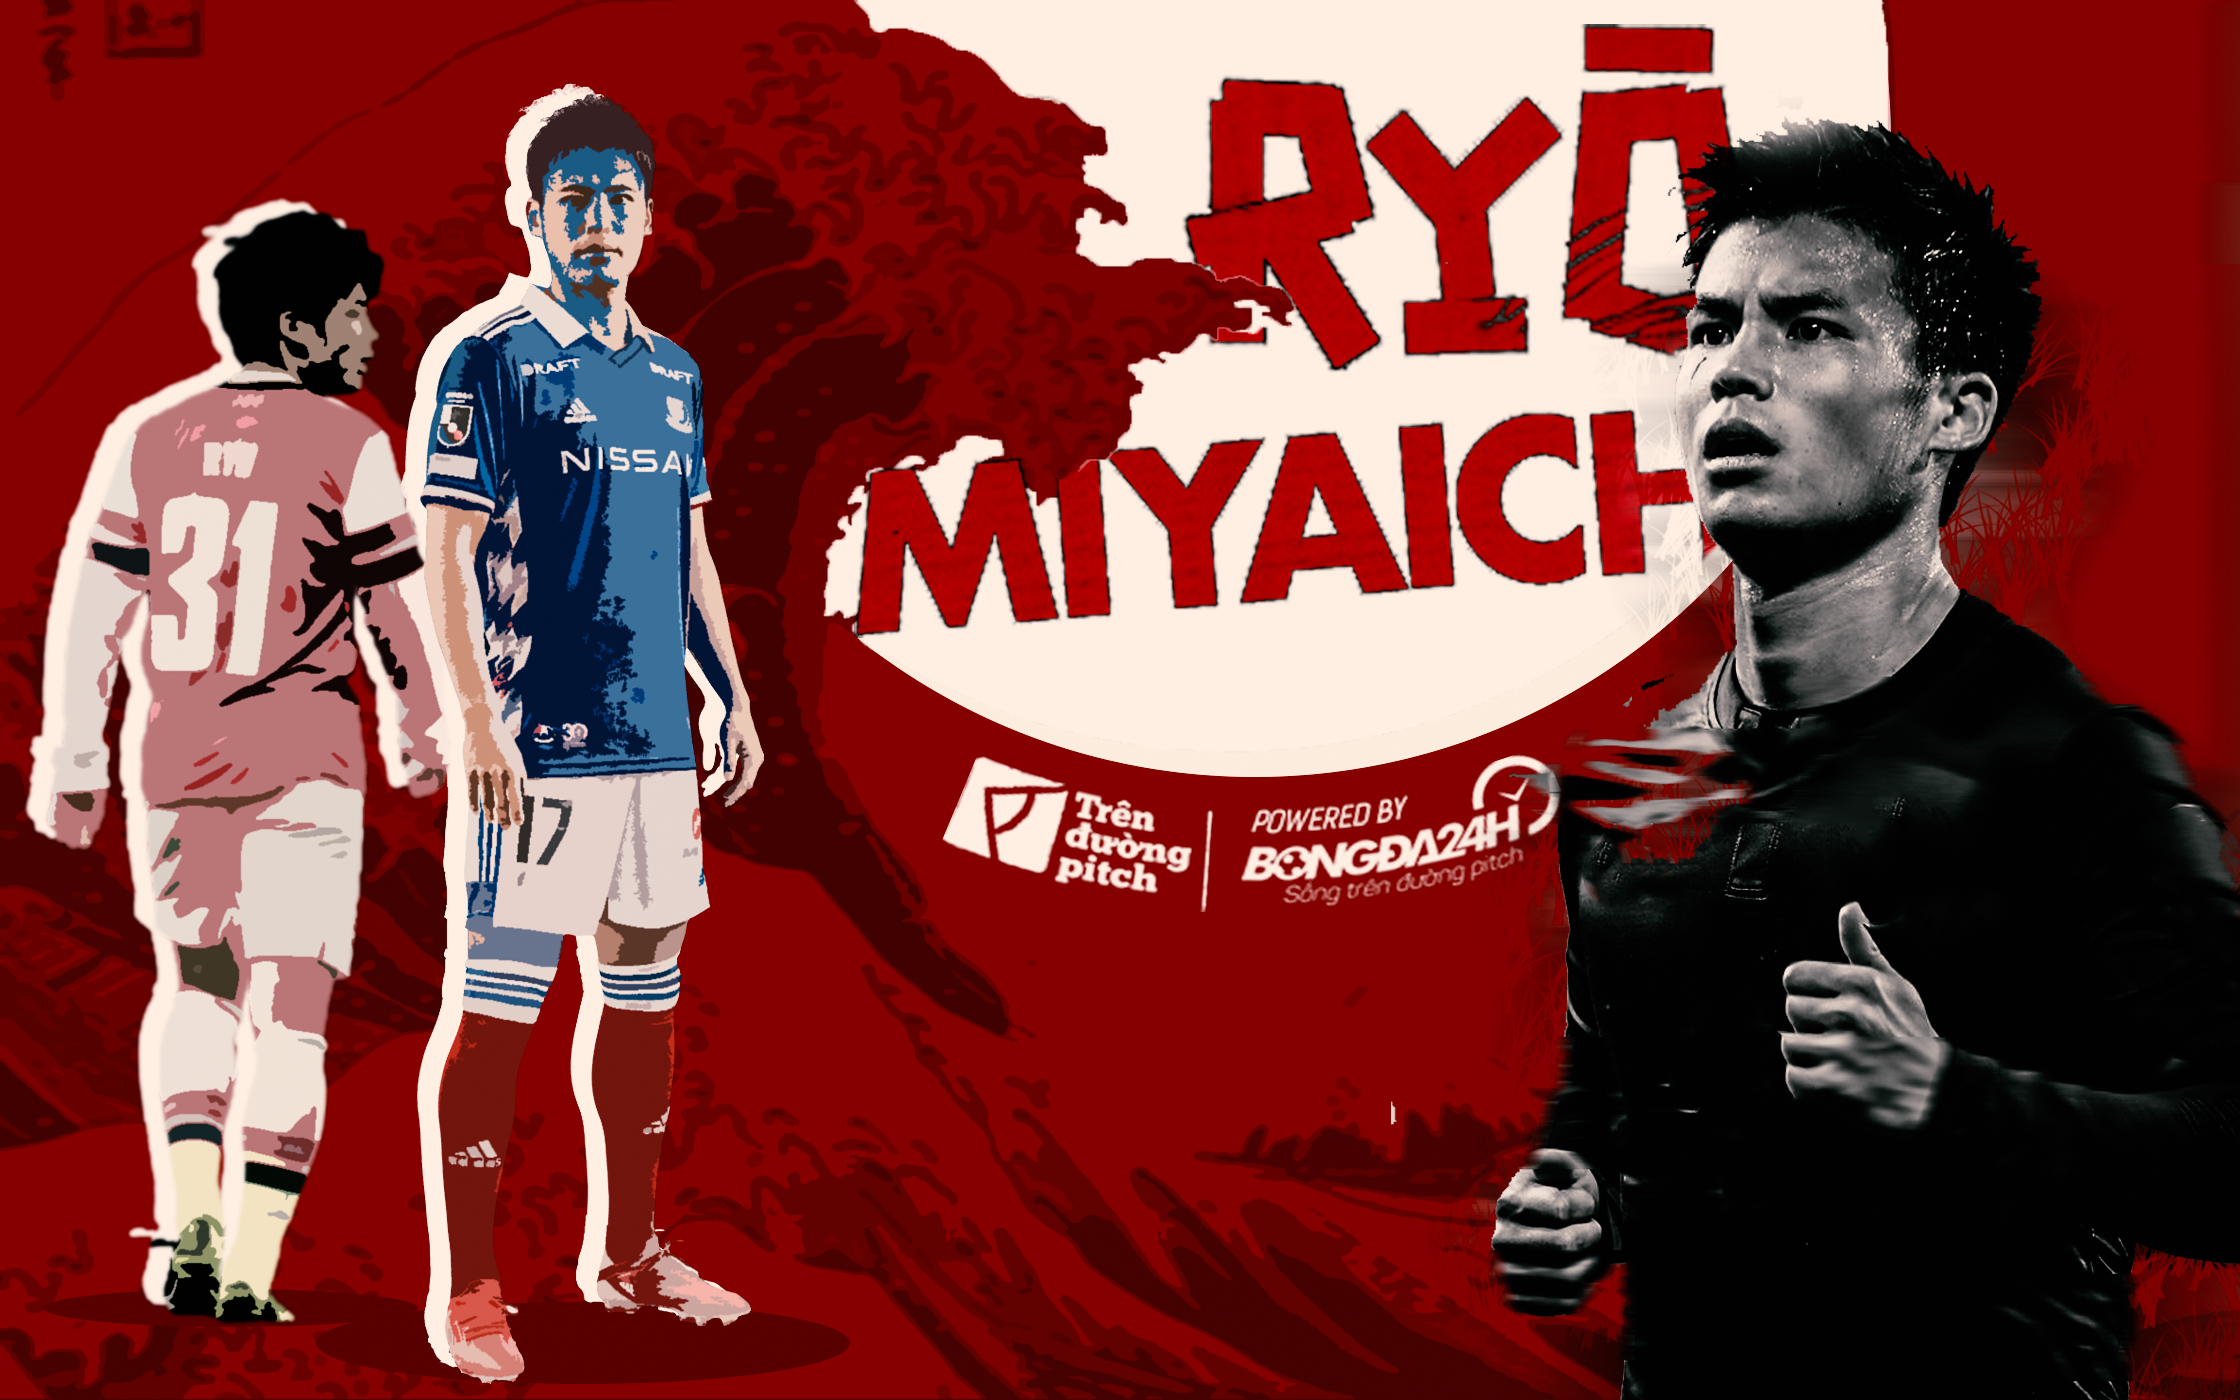 Ryo Miyaichi